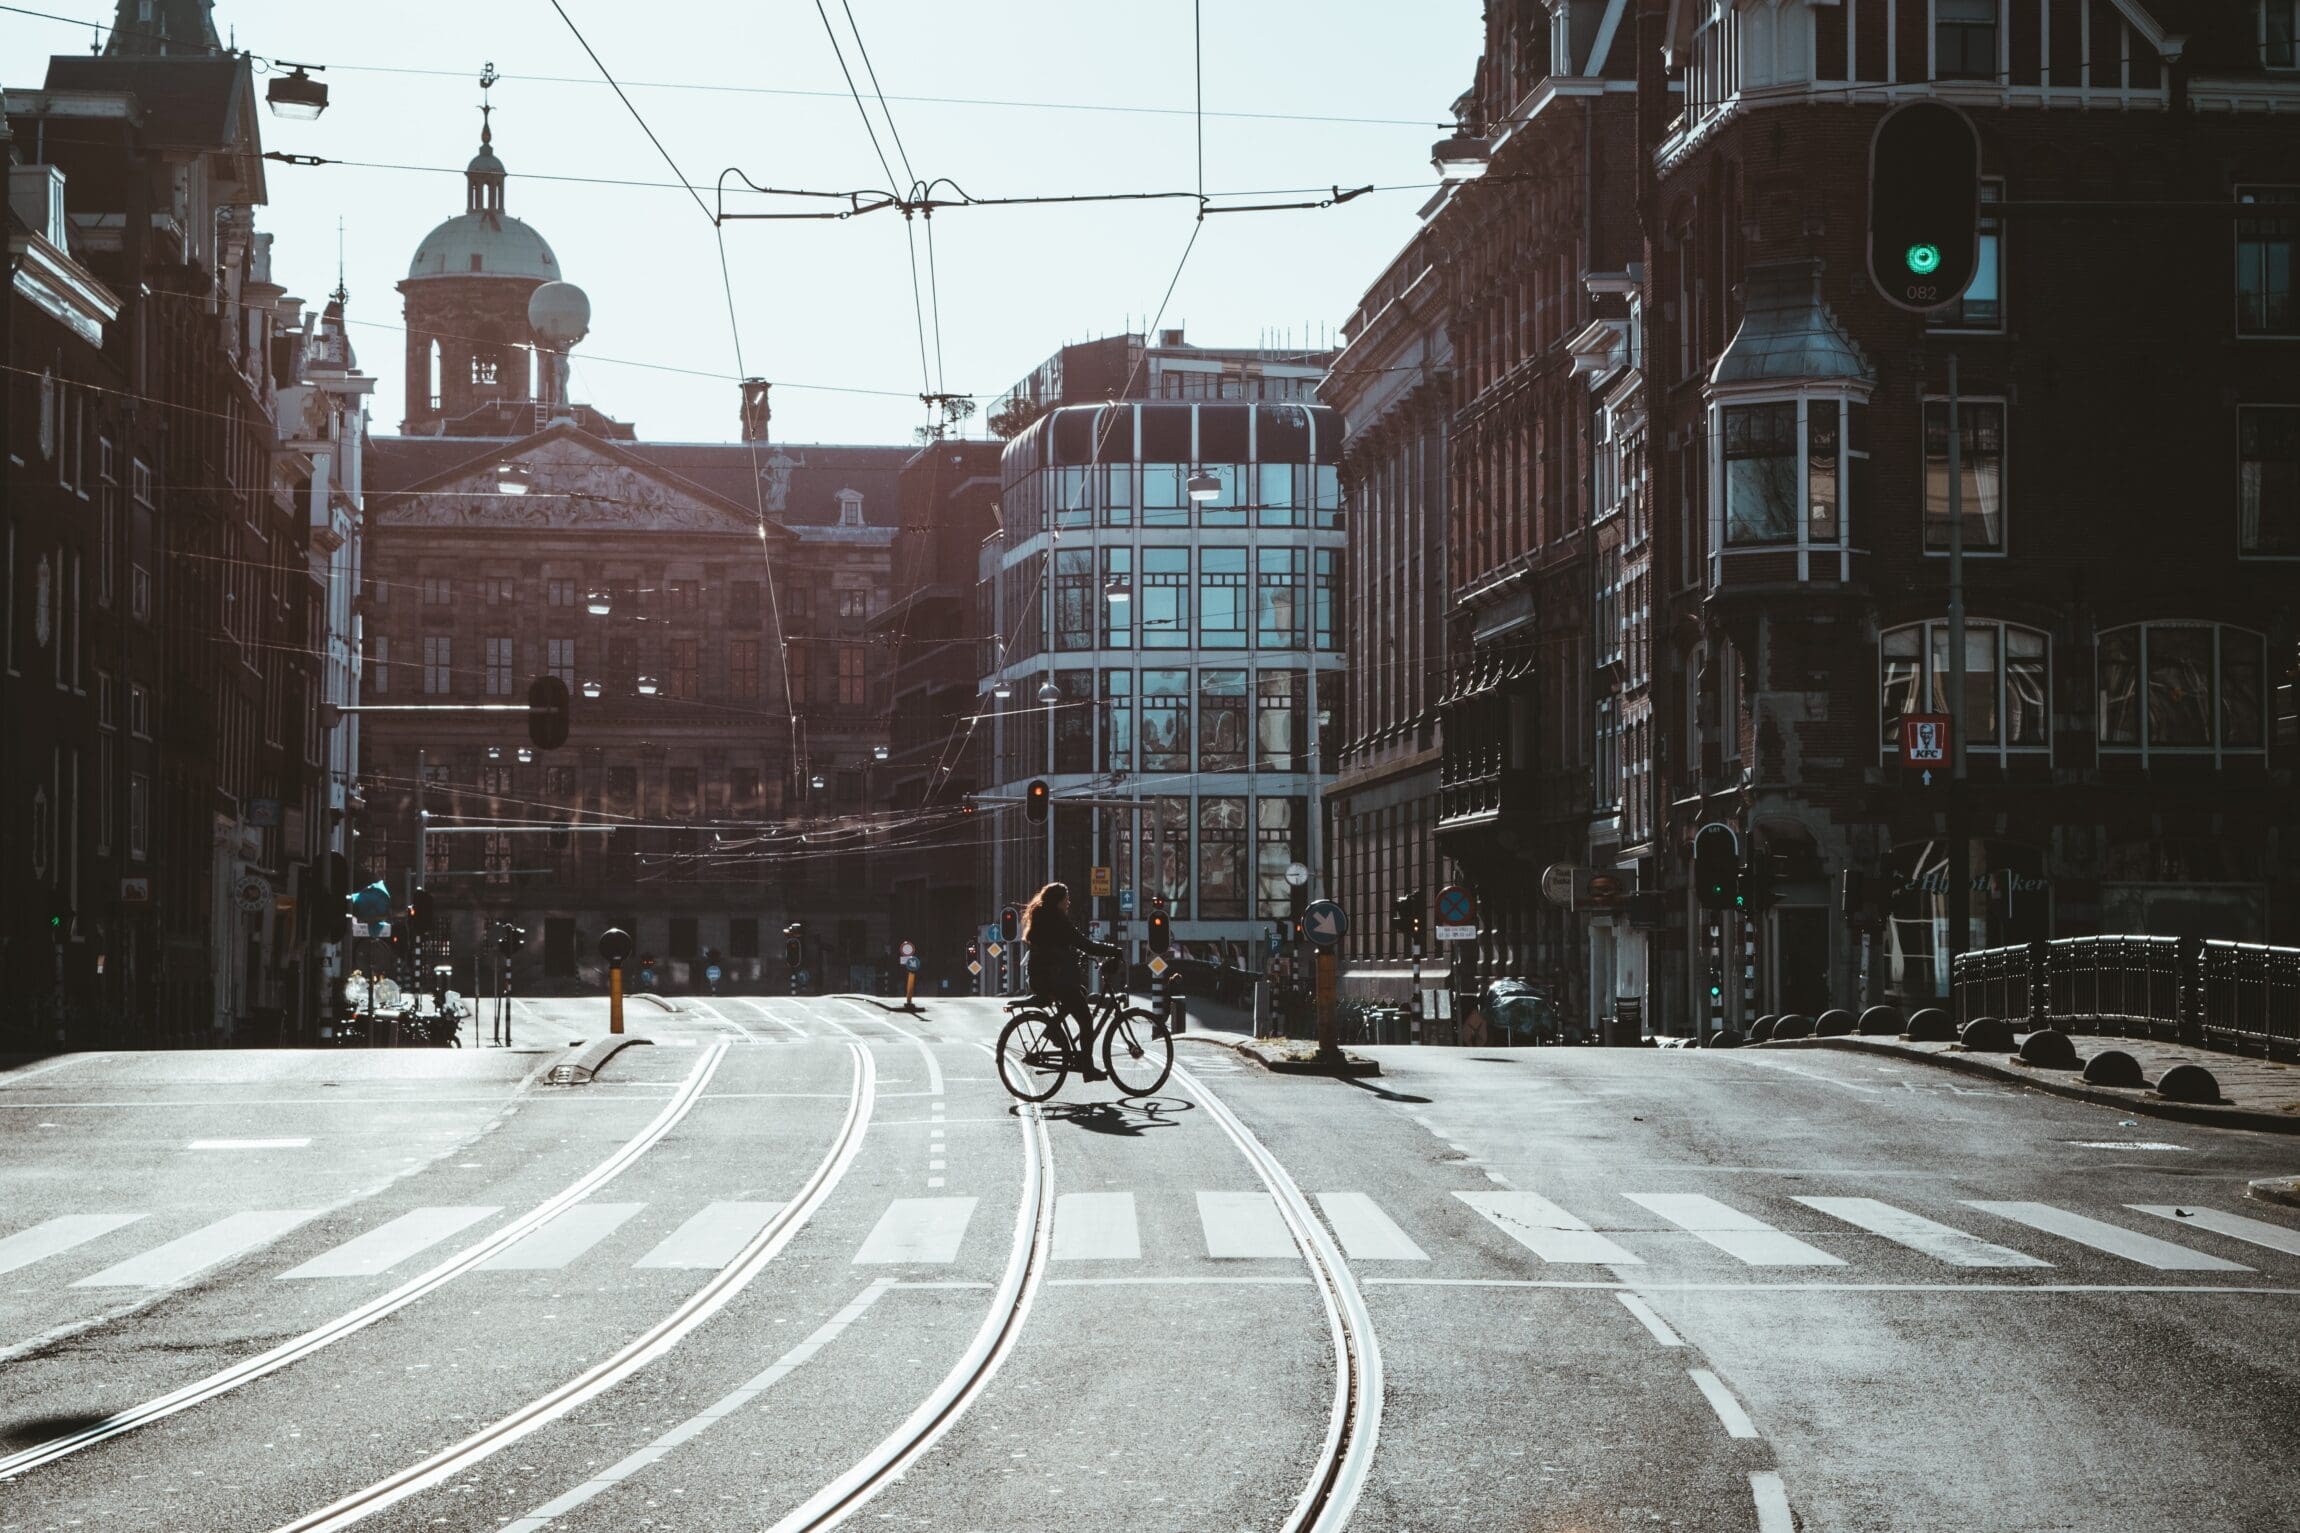 My city: Amsterdam | Bike rides through the street